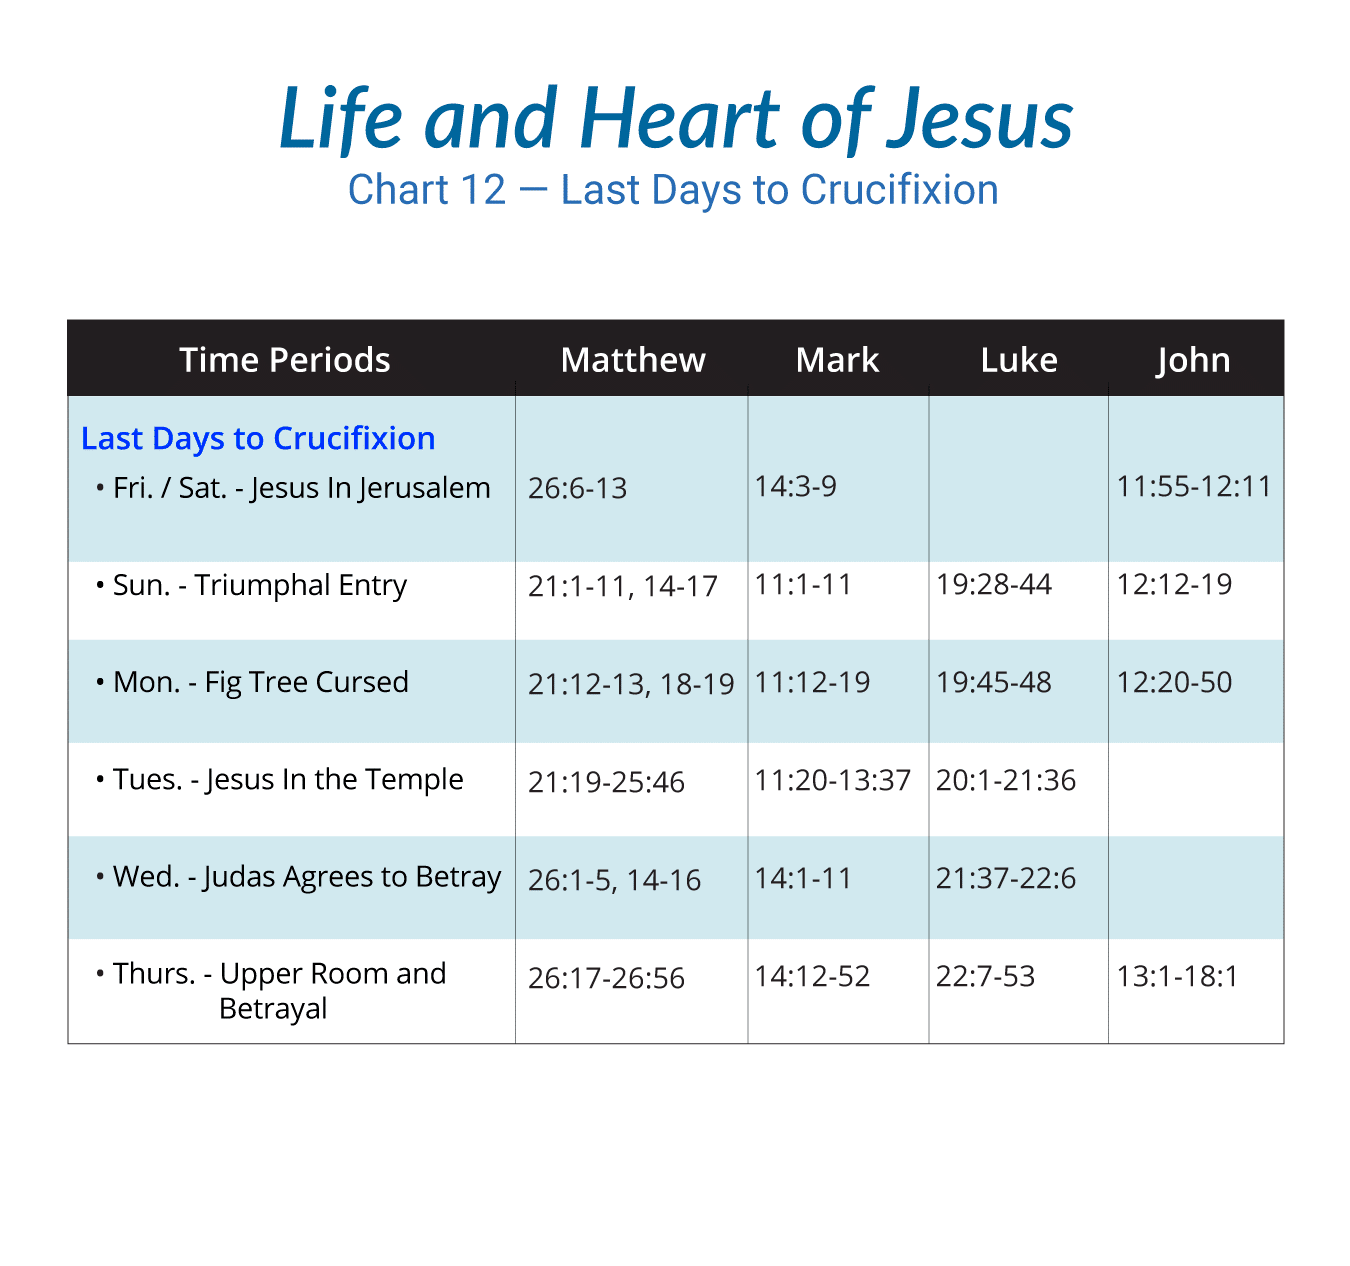 Life of Christ Chart 12 — The Last Days - Mar/Apr AD 33